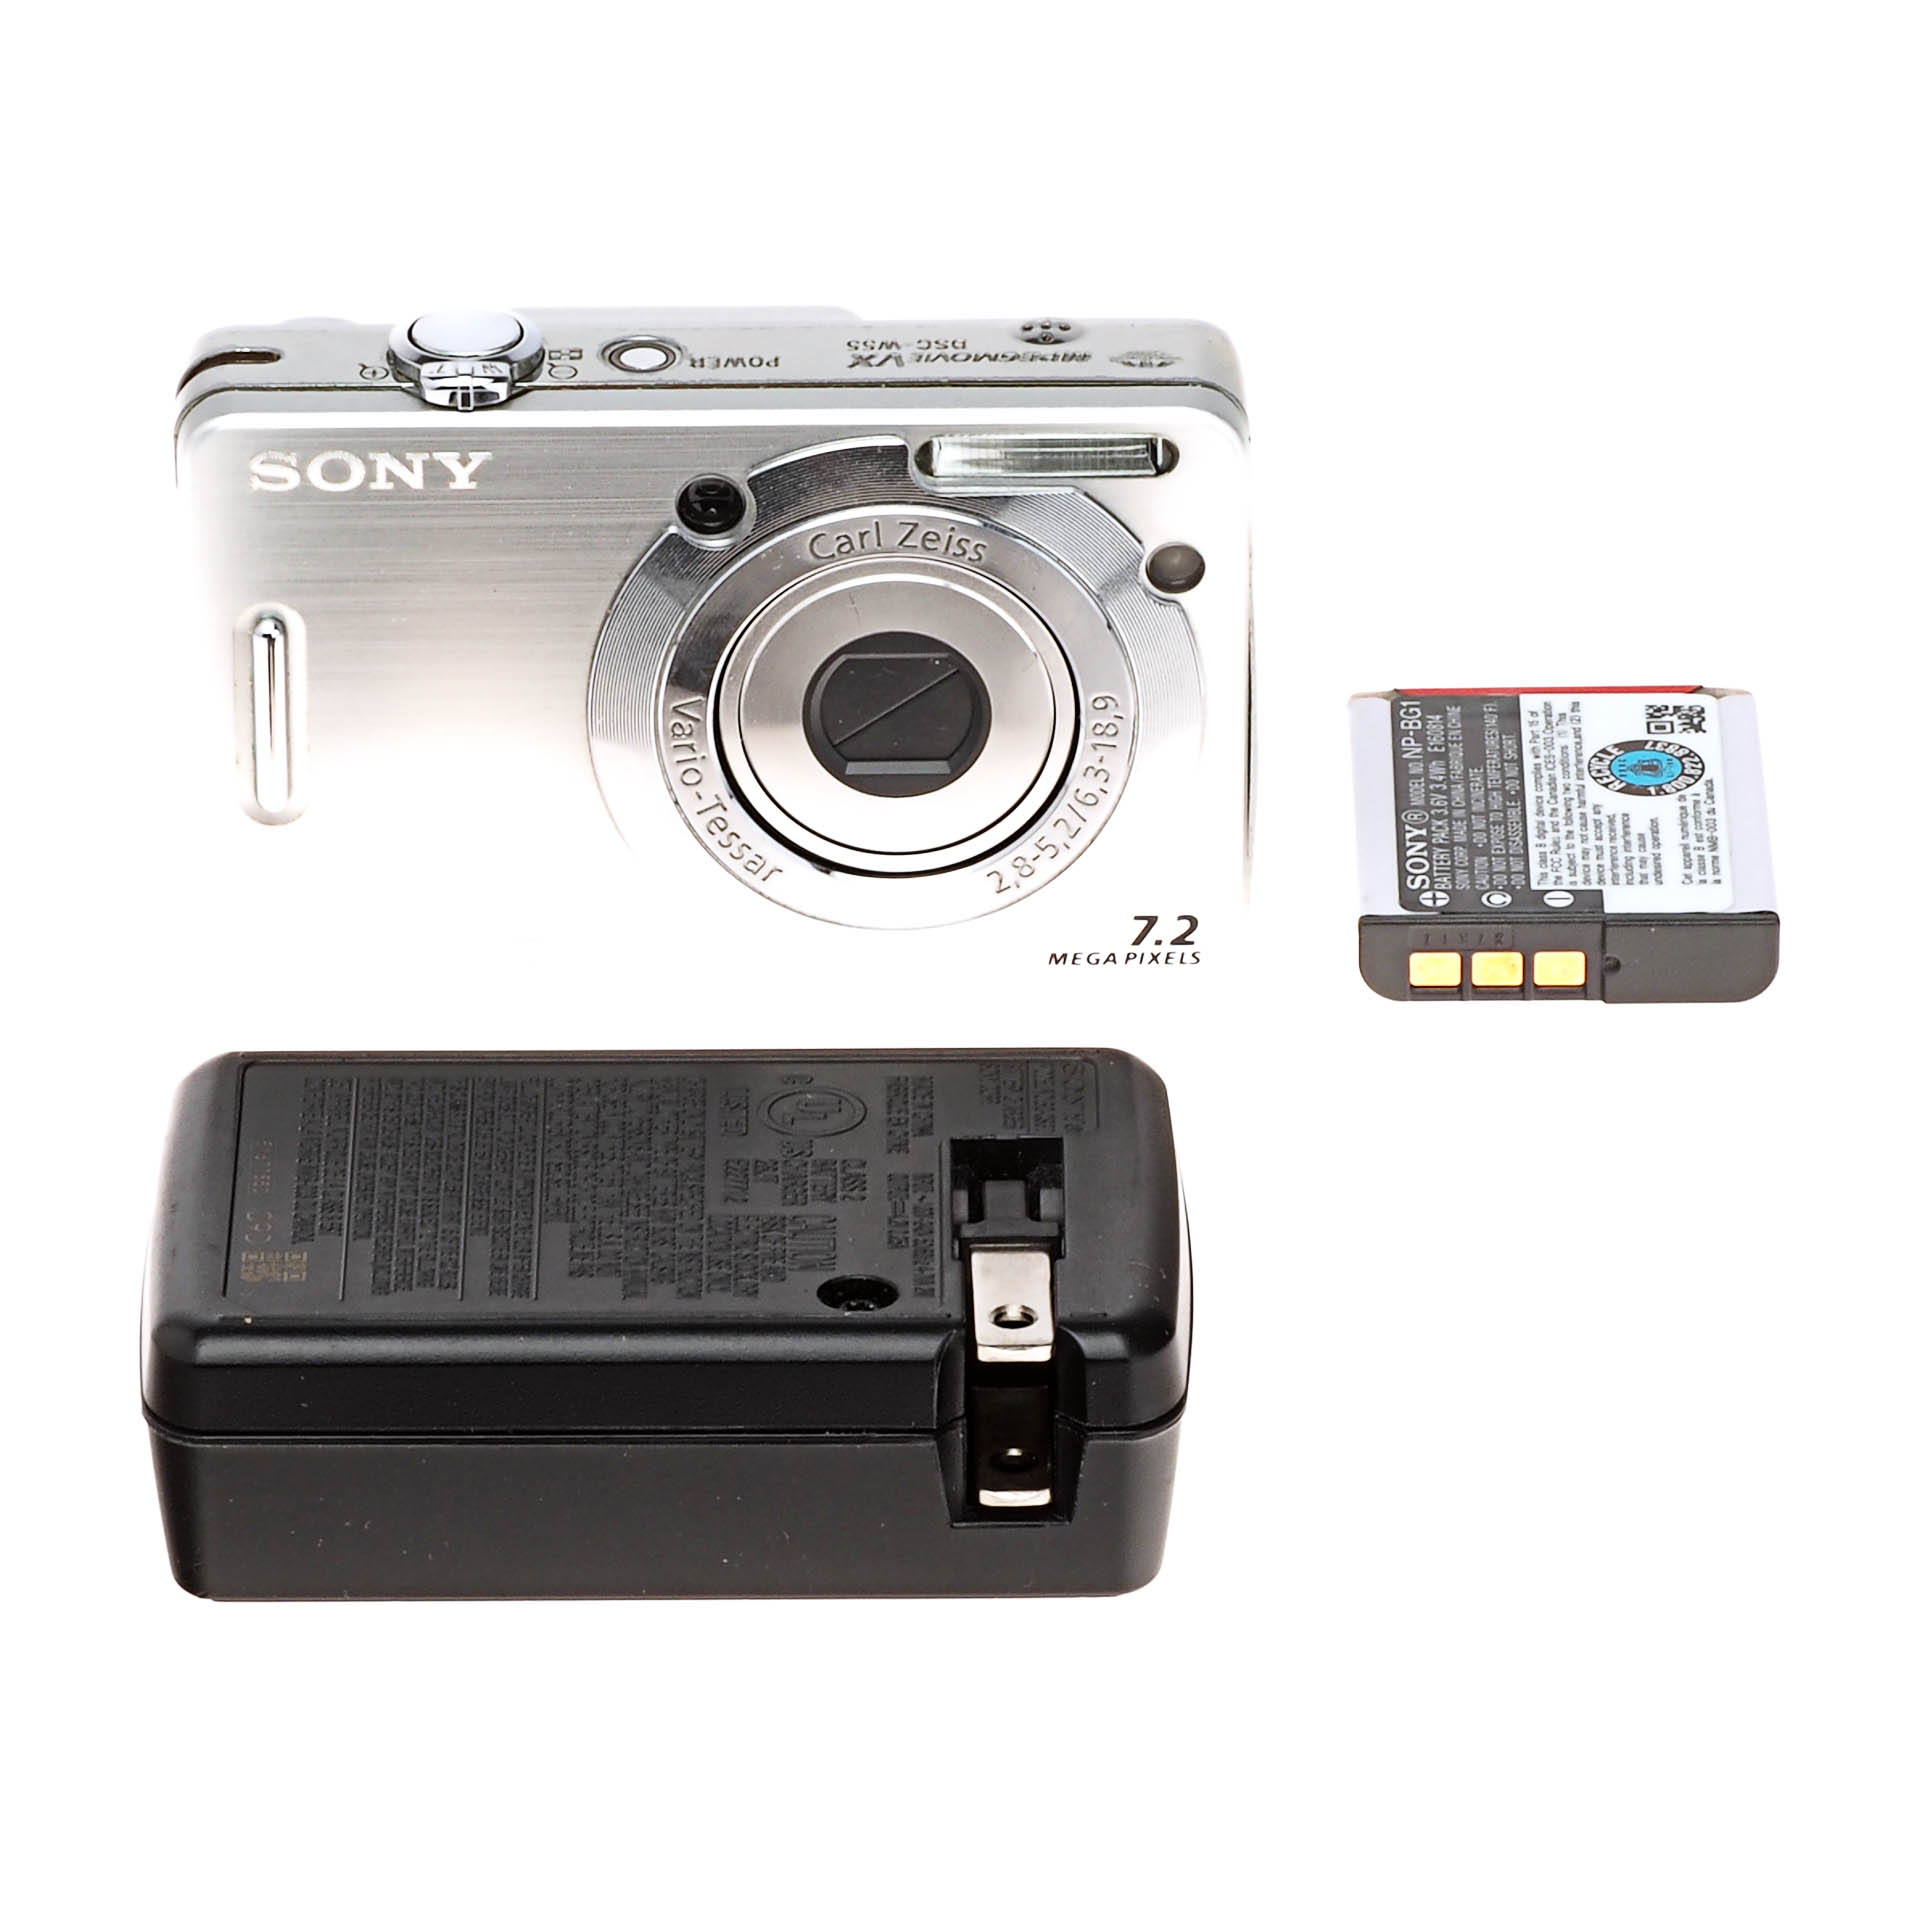 meel dok nabootsen Buy Sony Cyber-Shot DSC-W55 7.2 MP 3X Optical Zoom Digital Compact Camera  Silver DSCW55 - National Camera Exchange